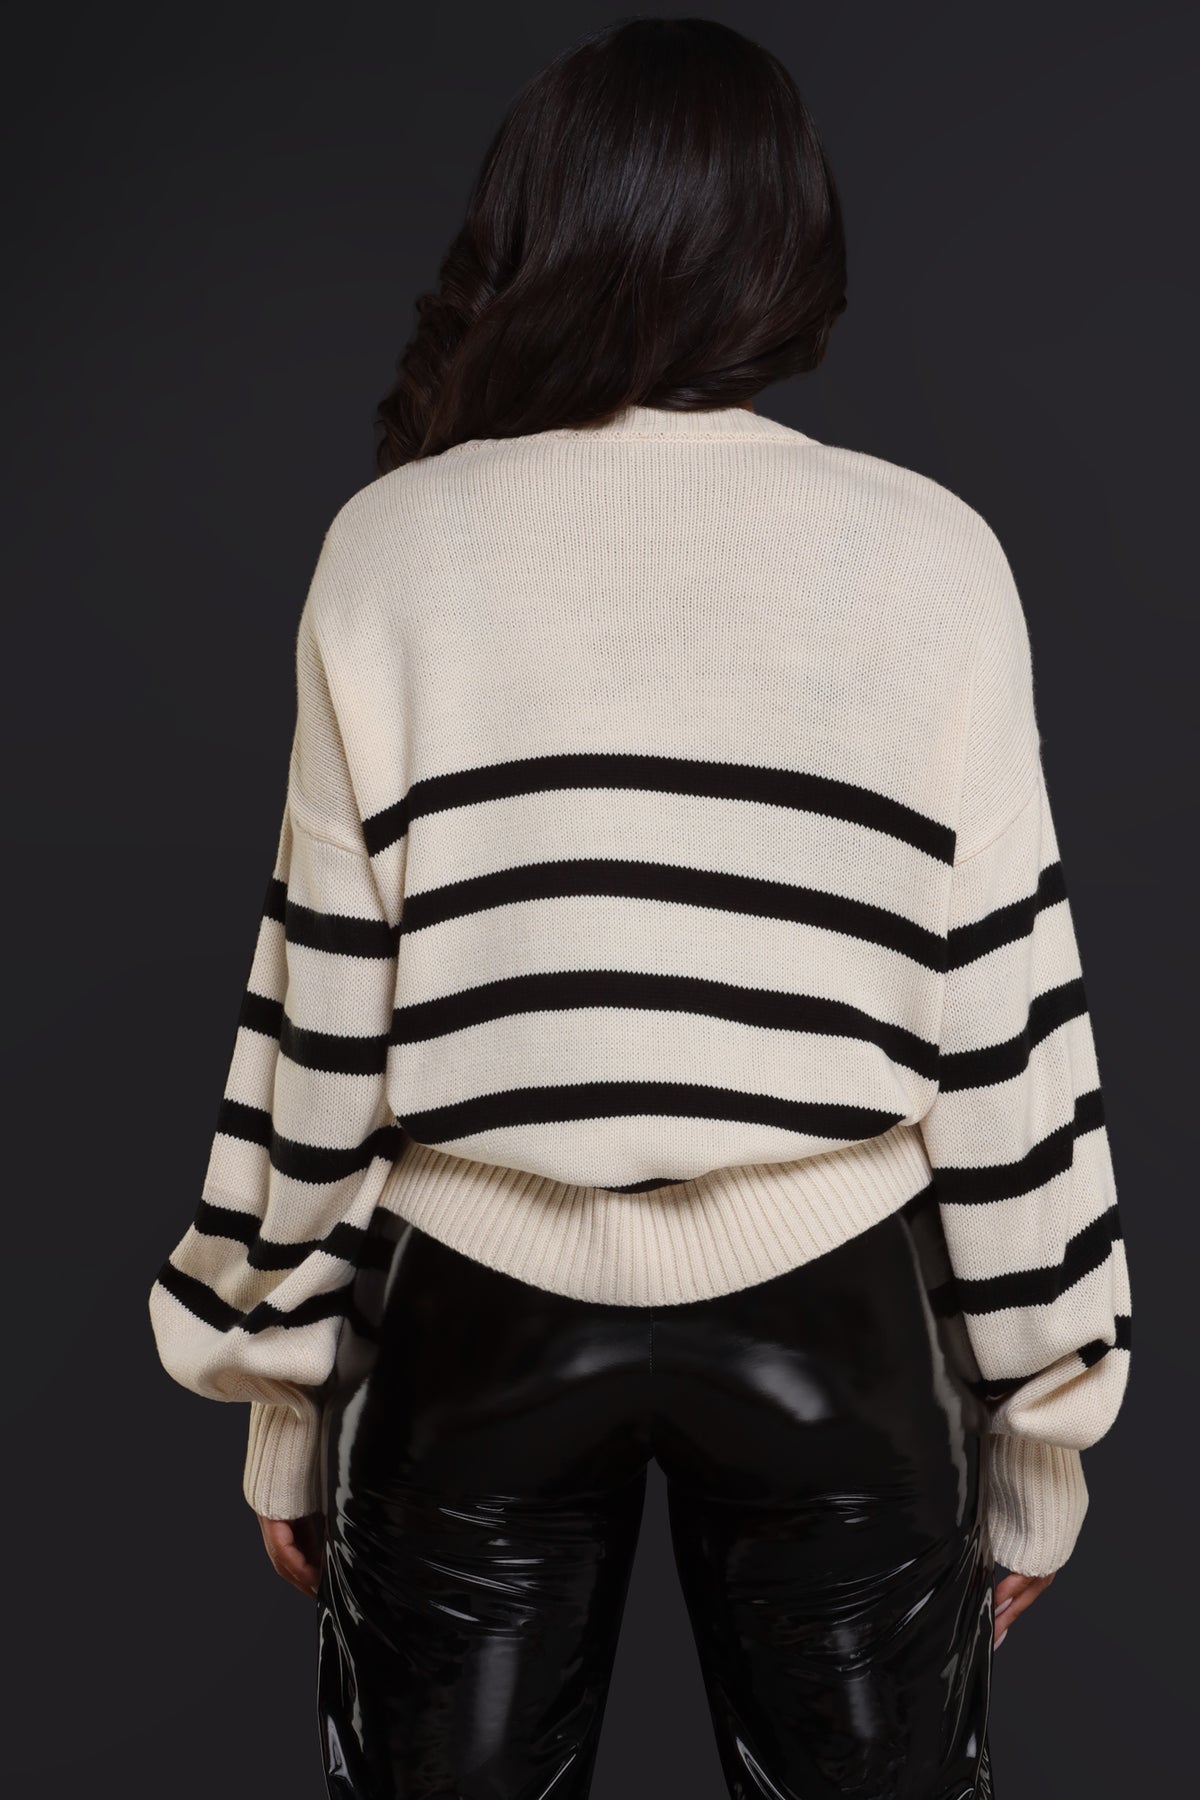 
              Care Taken Oversized Striped Sweater - Taupe/Black - Swank A Posh
            